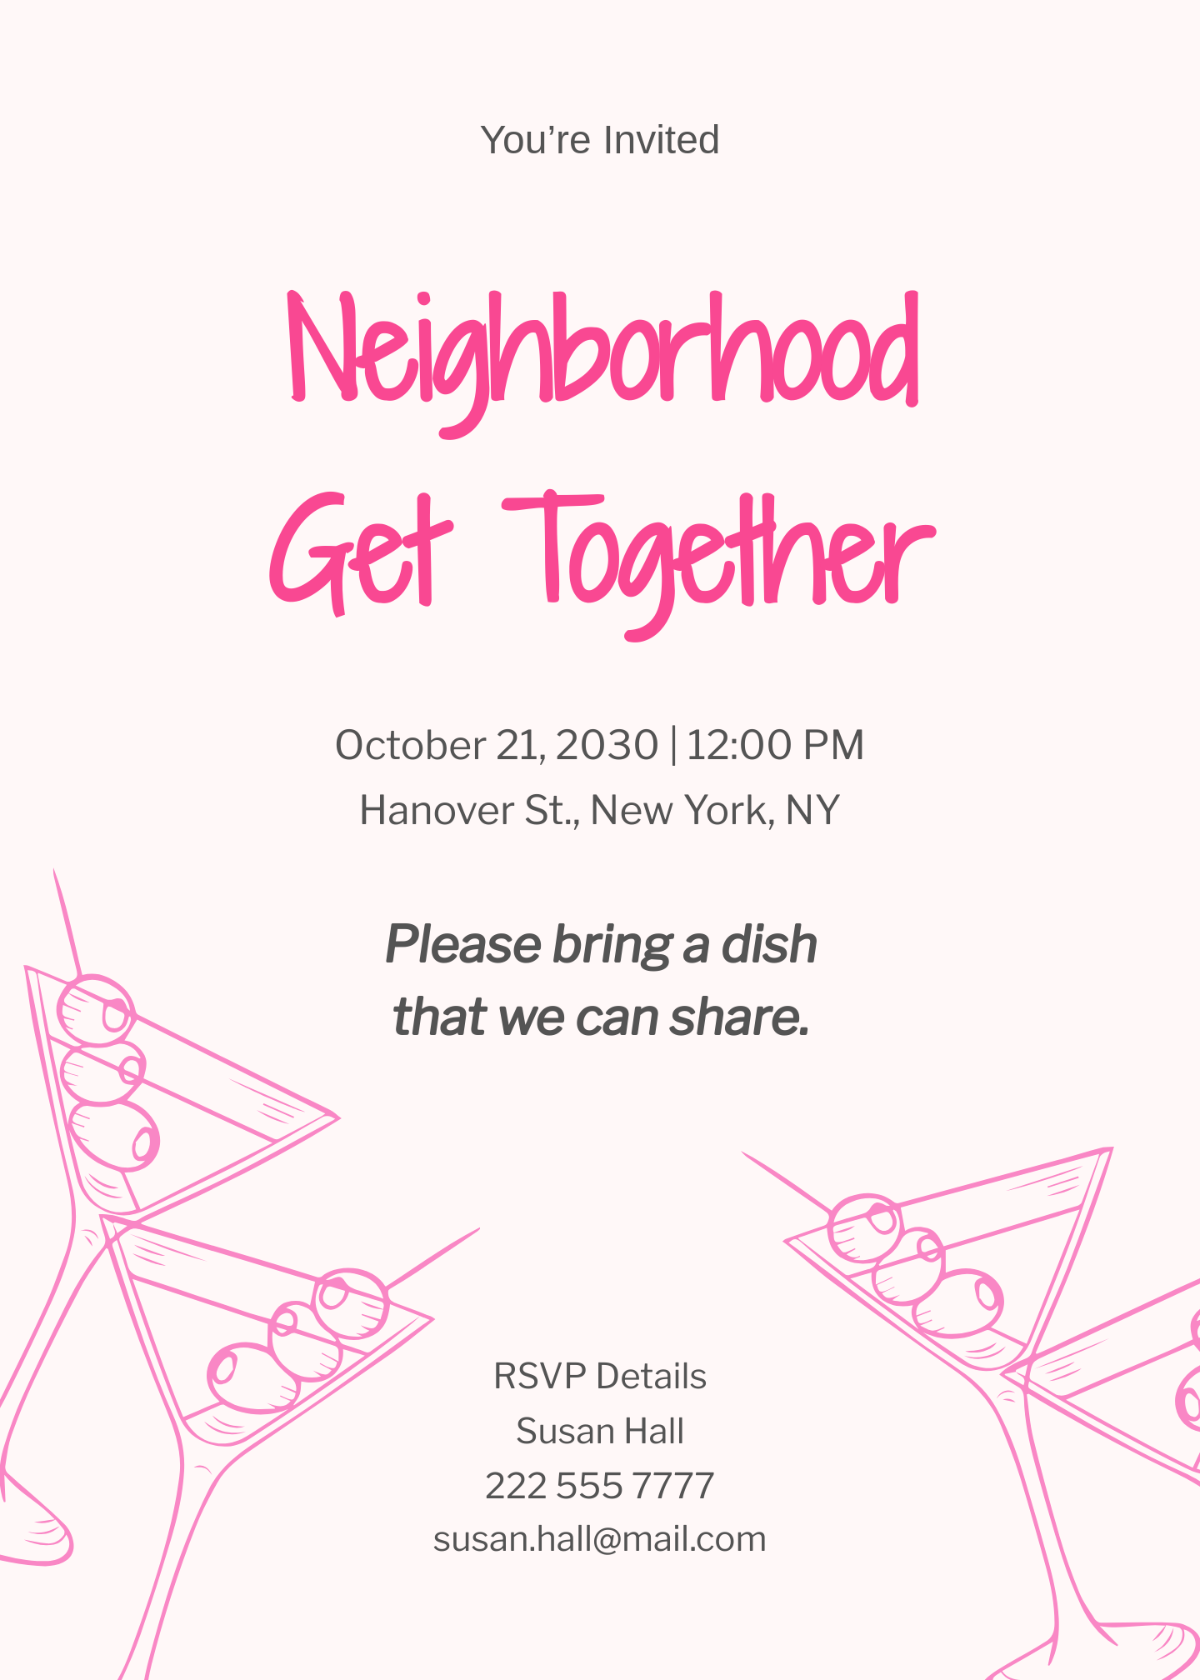 Neighborhood Get Together Invitation